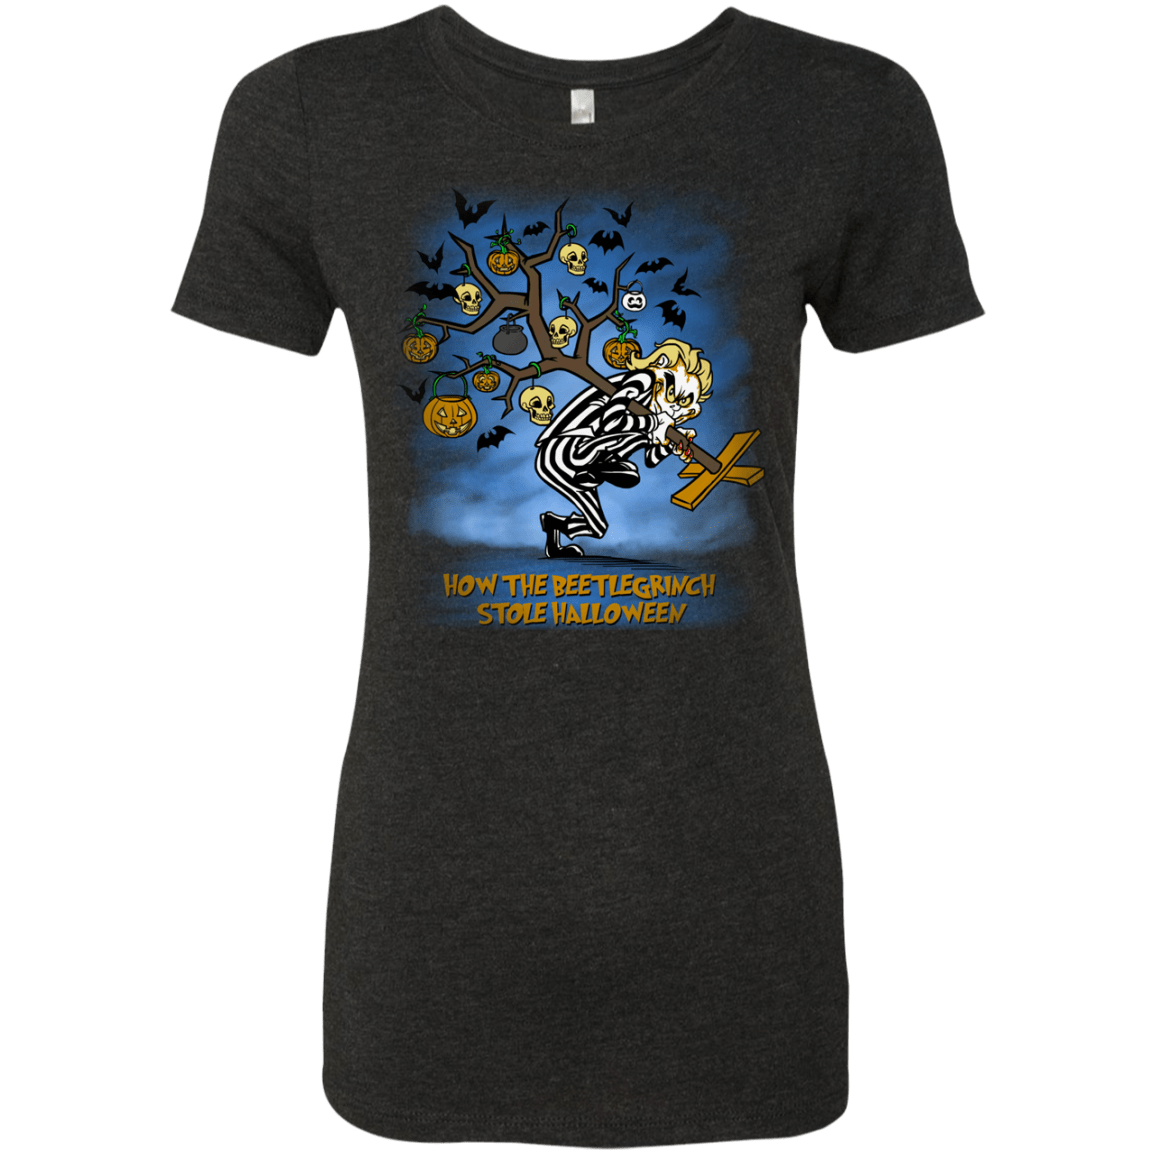 T-Shirts Vintage Black / Small Beetlegrinch Women's Triblend T-Shirt